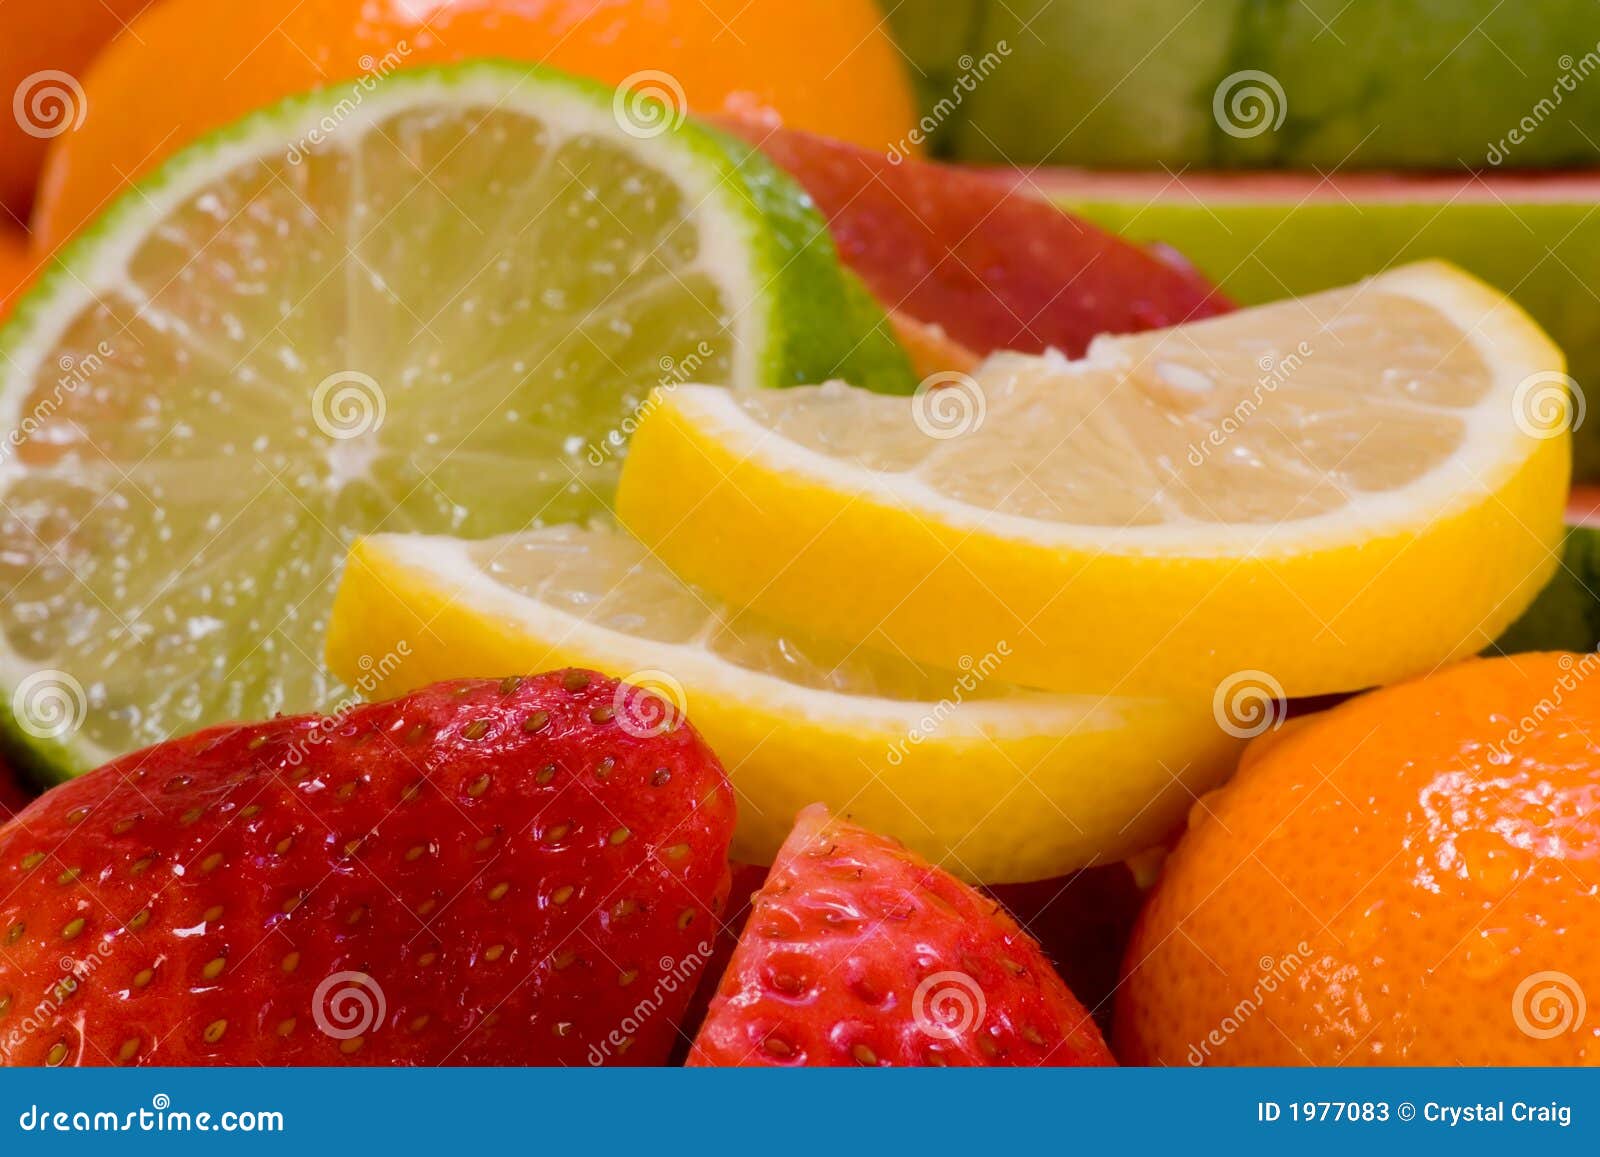 fresh fruit assortment